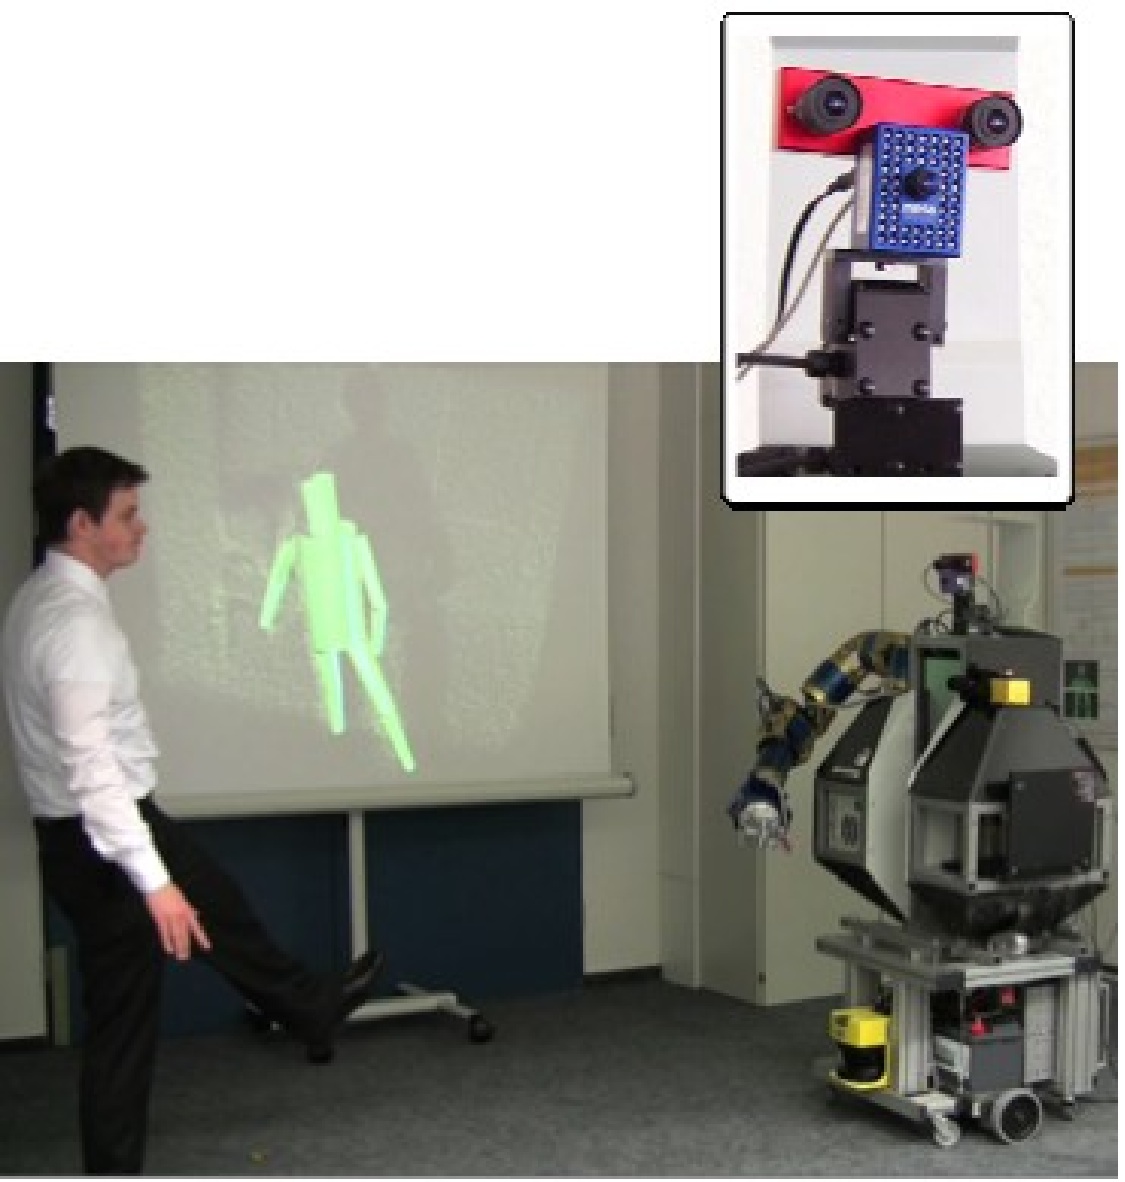 multi-sensor 3D-body tracking